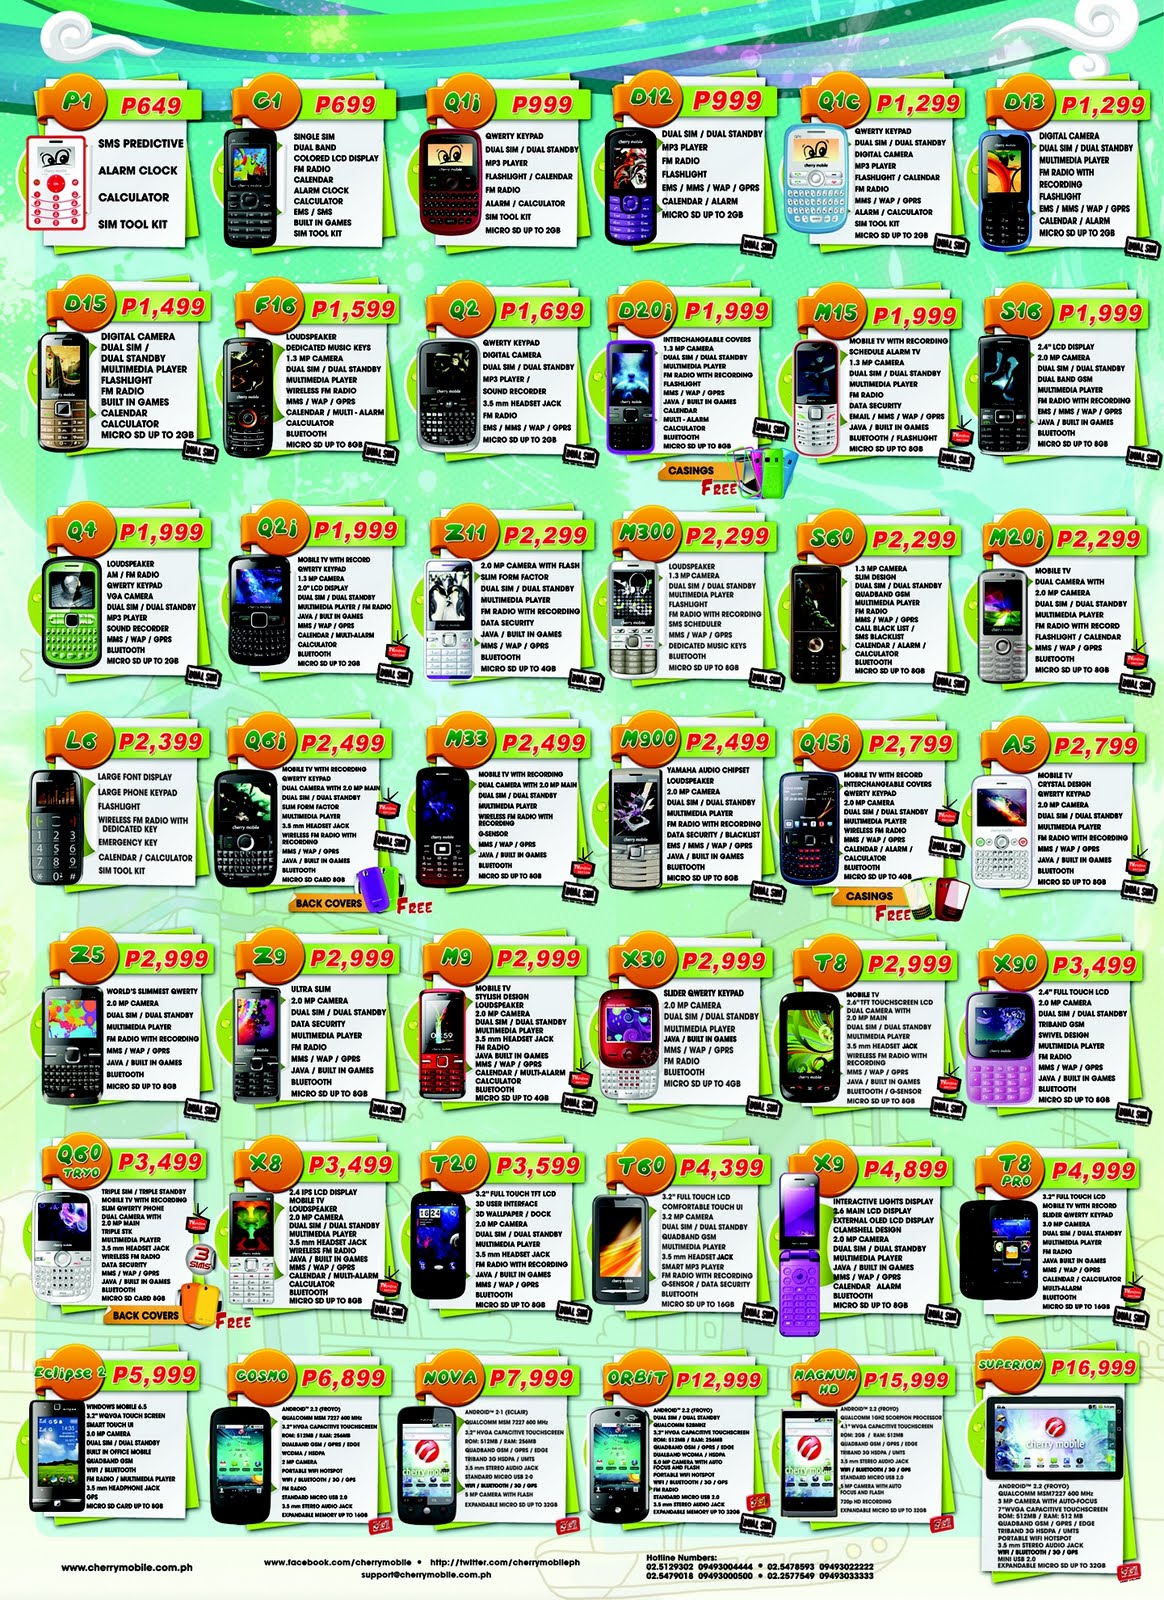 https://blogger.googleusercontent.com/img/b/R29vZ2xl/AVvXsEheI7NjLM1OJy2ZSIWdGNVhw7xBTJLazkZ7BLFQtwtYptyTNUiinA1v6ZwgA6Mjfo1MBEZxMfThEQ8zEG3H9wtq2yVylgEPRCK3wUaodwa09YKRvdKvm2qb-xRSEmROW54gkKiT0gFiOZY/s1600/cherry+mobile+phones+price+list%252C+features%252C+specs%252C+promos.jpg